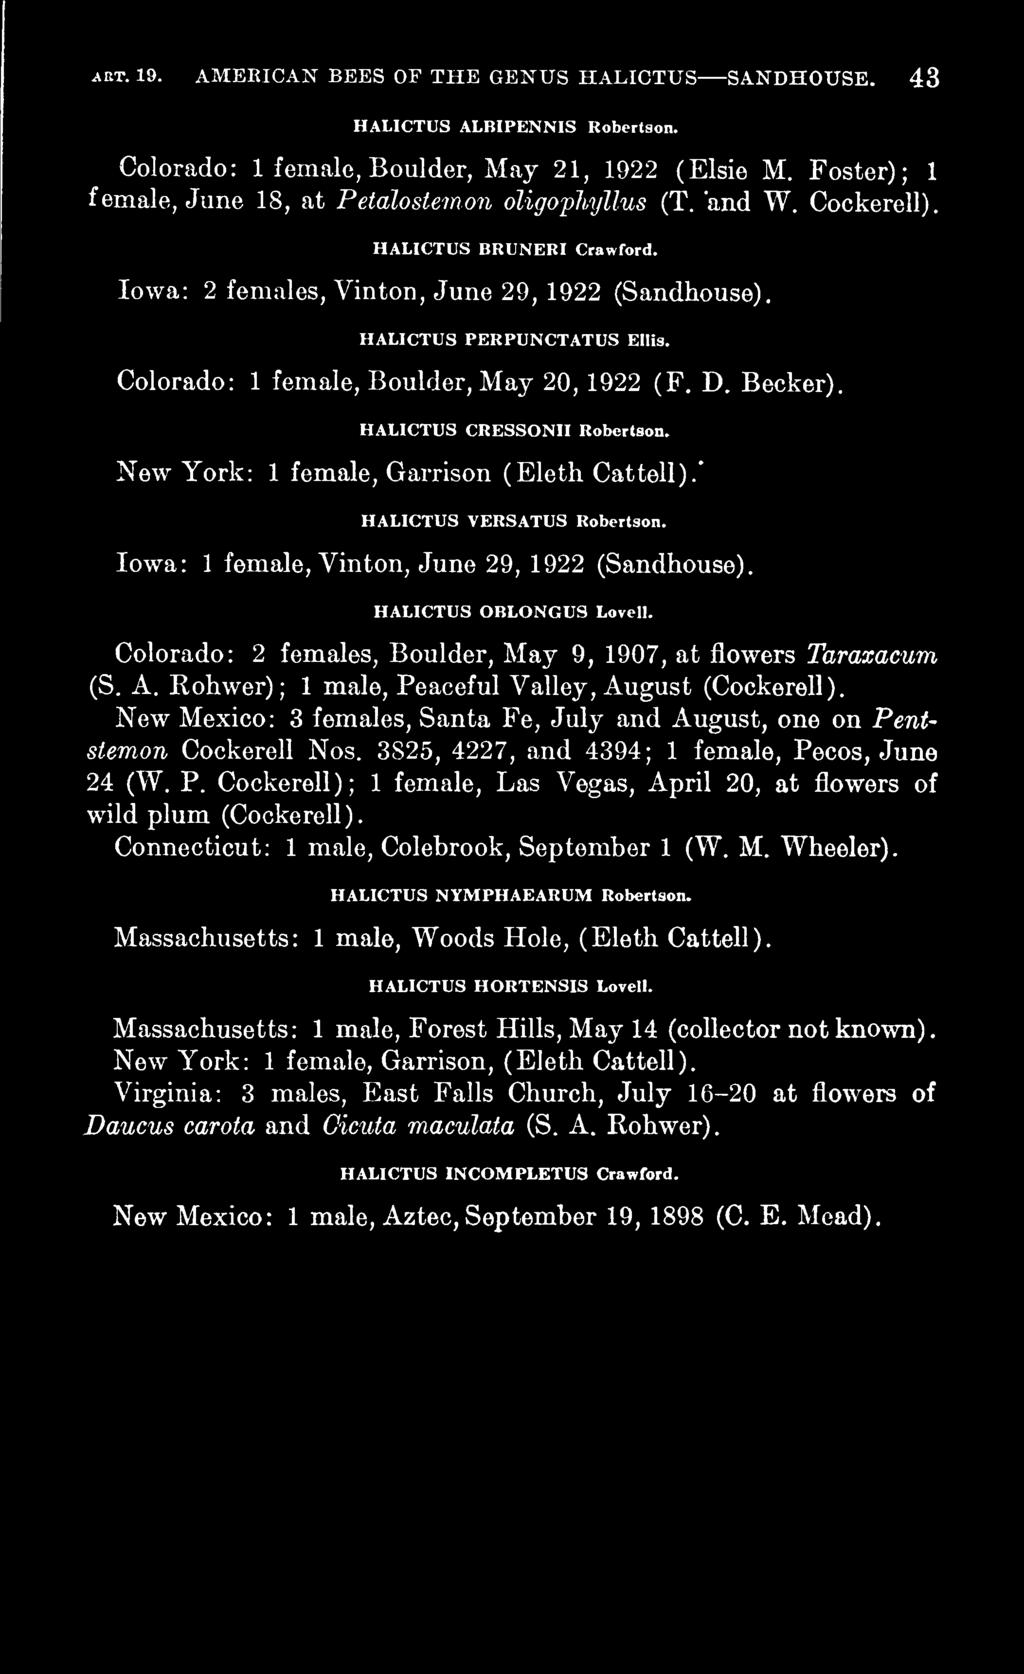 Colorado: 1 female, Boulder, May 20, 1922 (F. D. Becker). HALICTUS CRESSONII Robertson. New York: 1 female, Garrison (Eleth Cattell).* HALICTUS VERSATUS Robertson.